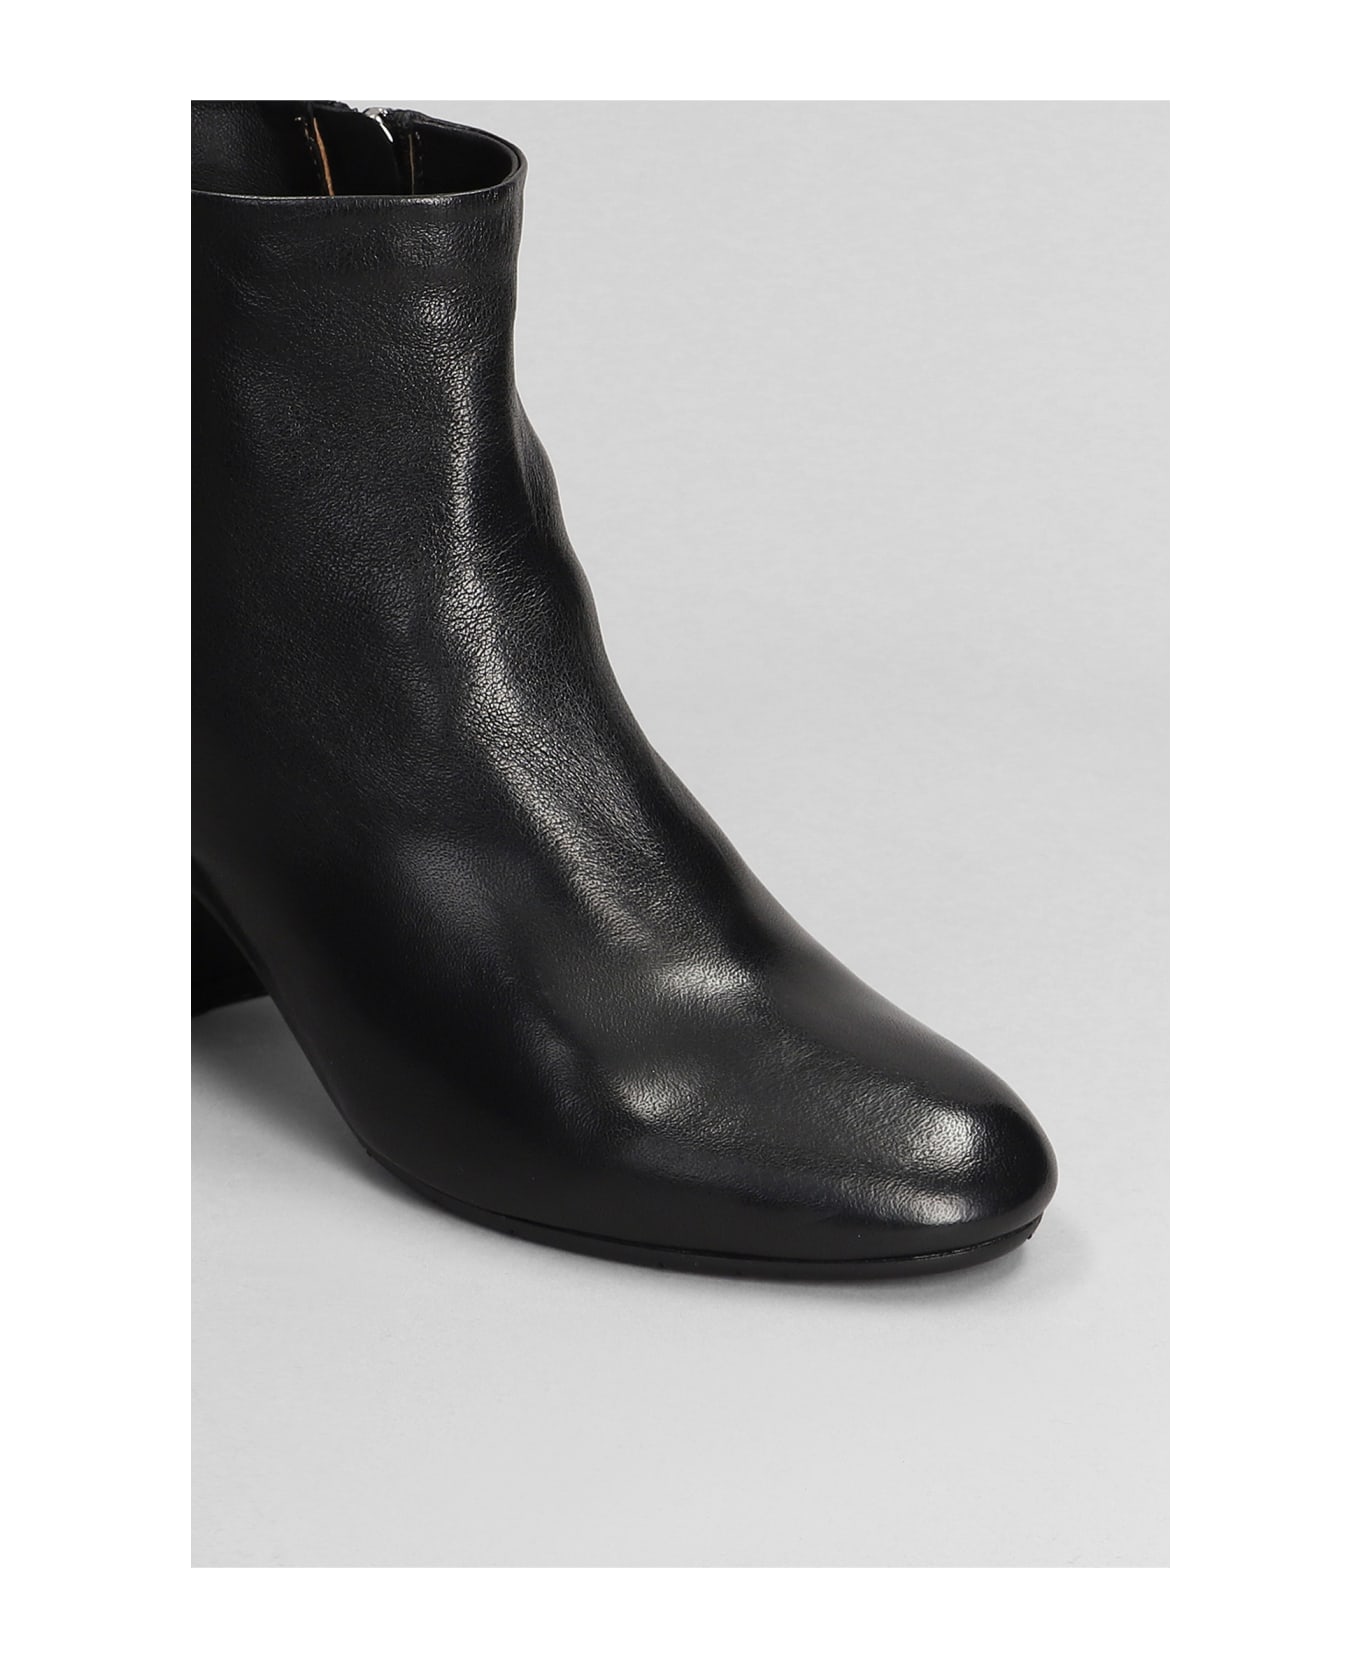 Julie Dee High Heels Ankle Boots In Black Leather - black